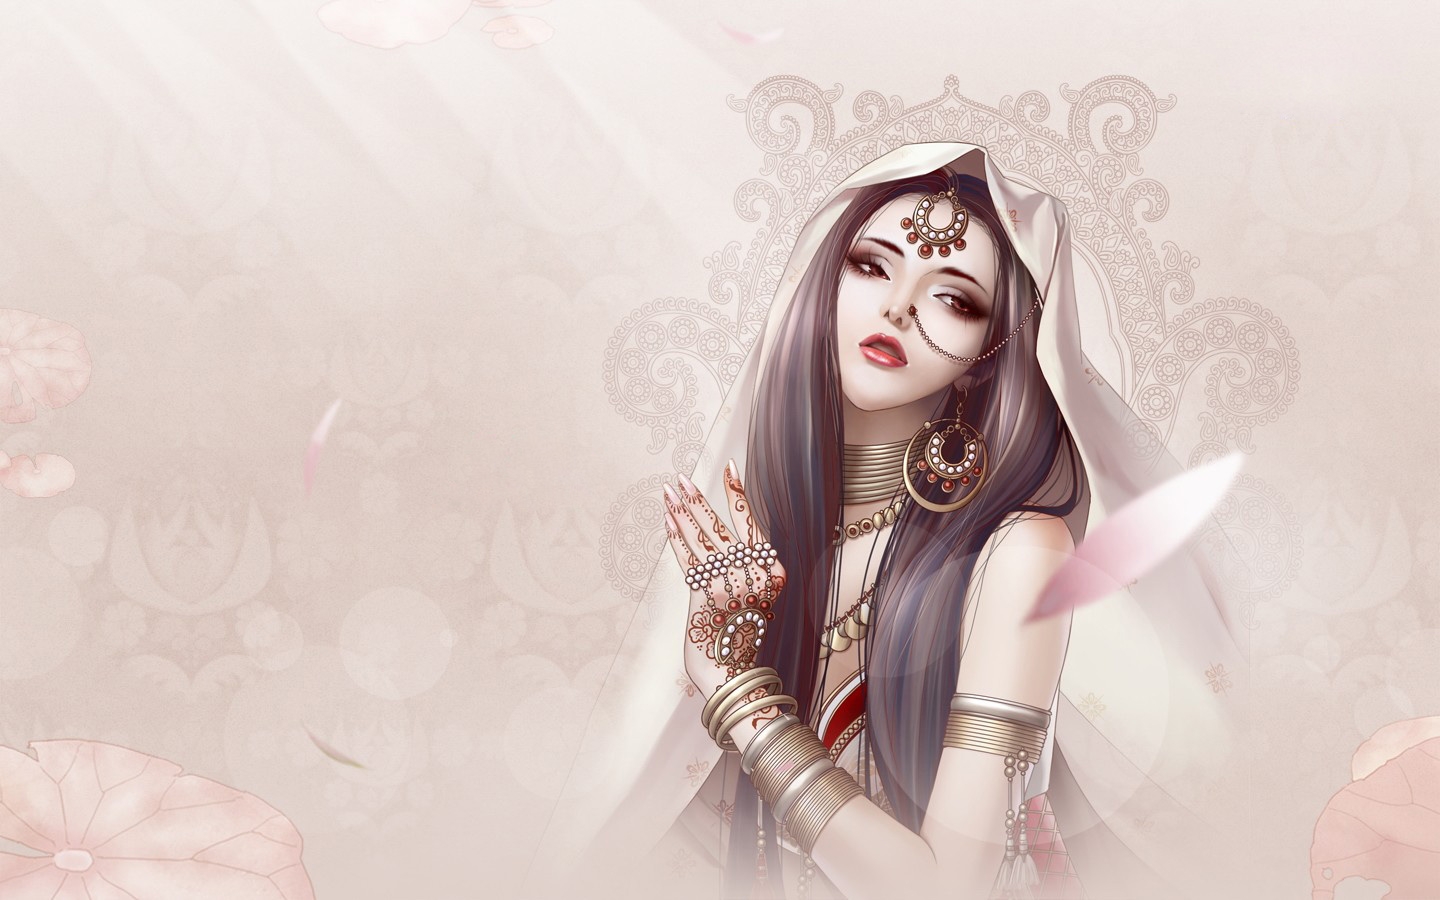 Ancient Beautiful Girl artistic wallpapers | Desktop Backgrounds ...